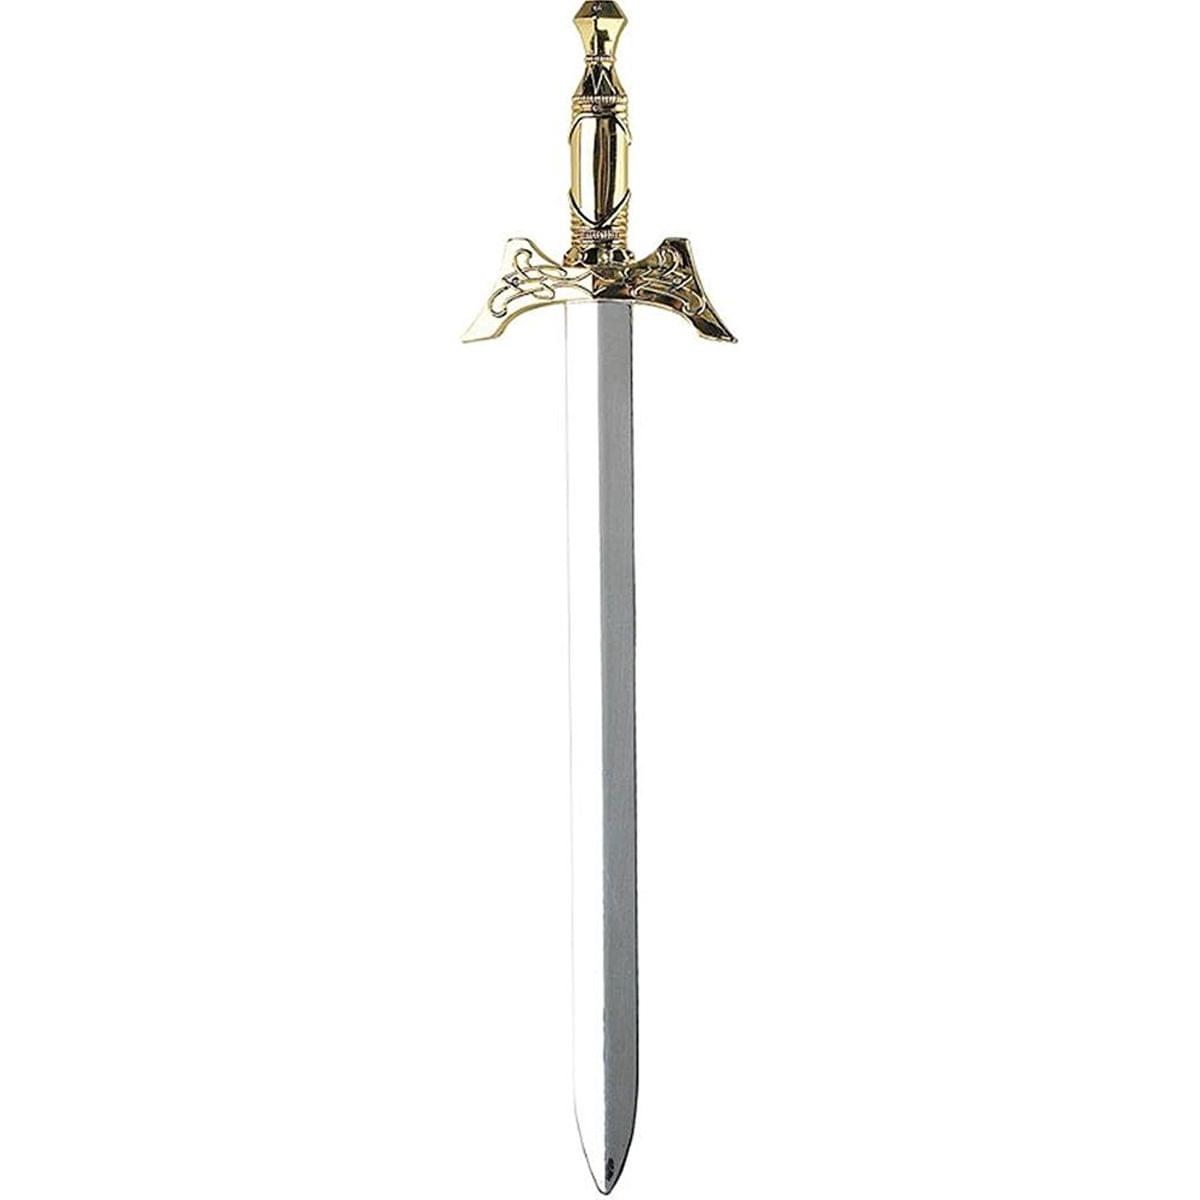 King Sword Costume Accessory